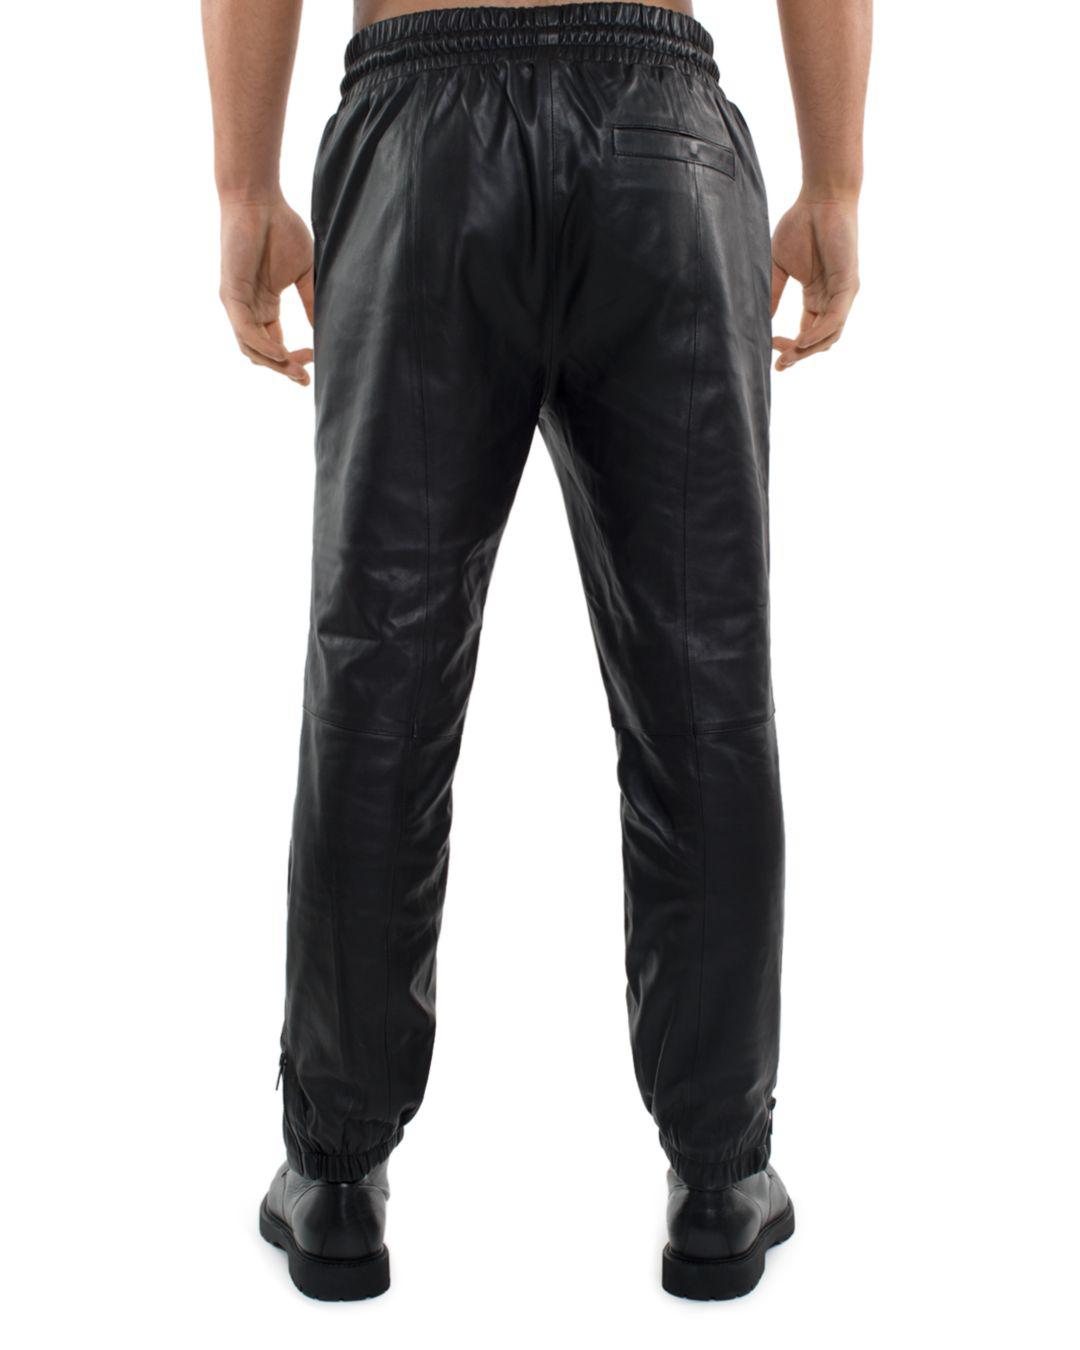 Sean John Leather Track Pants in Black for Men - Lyst